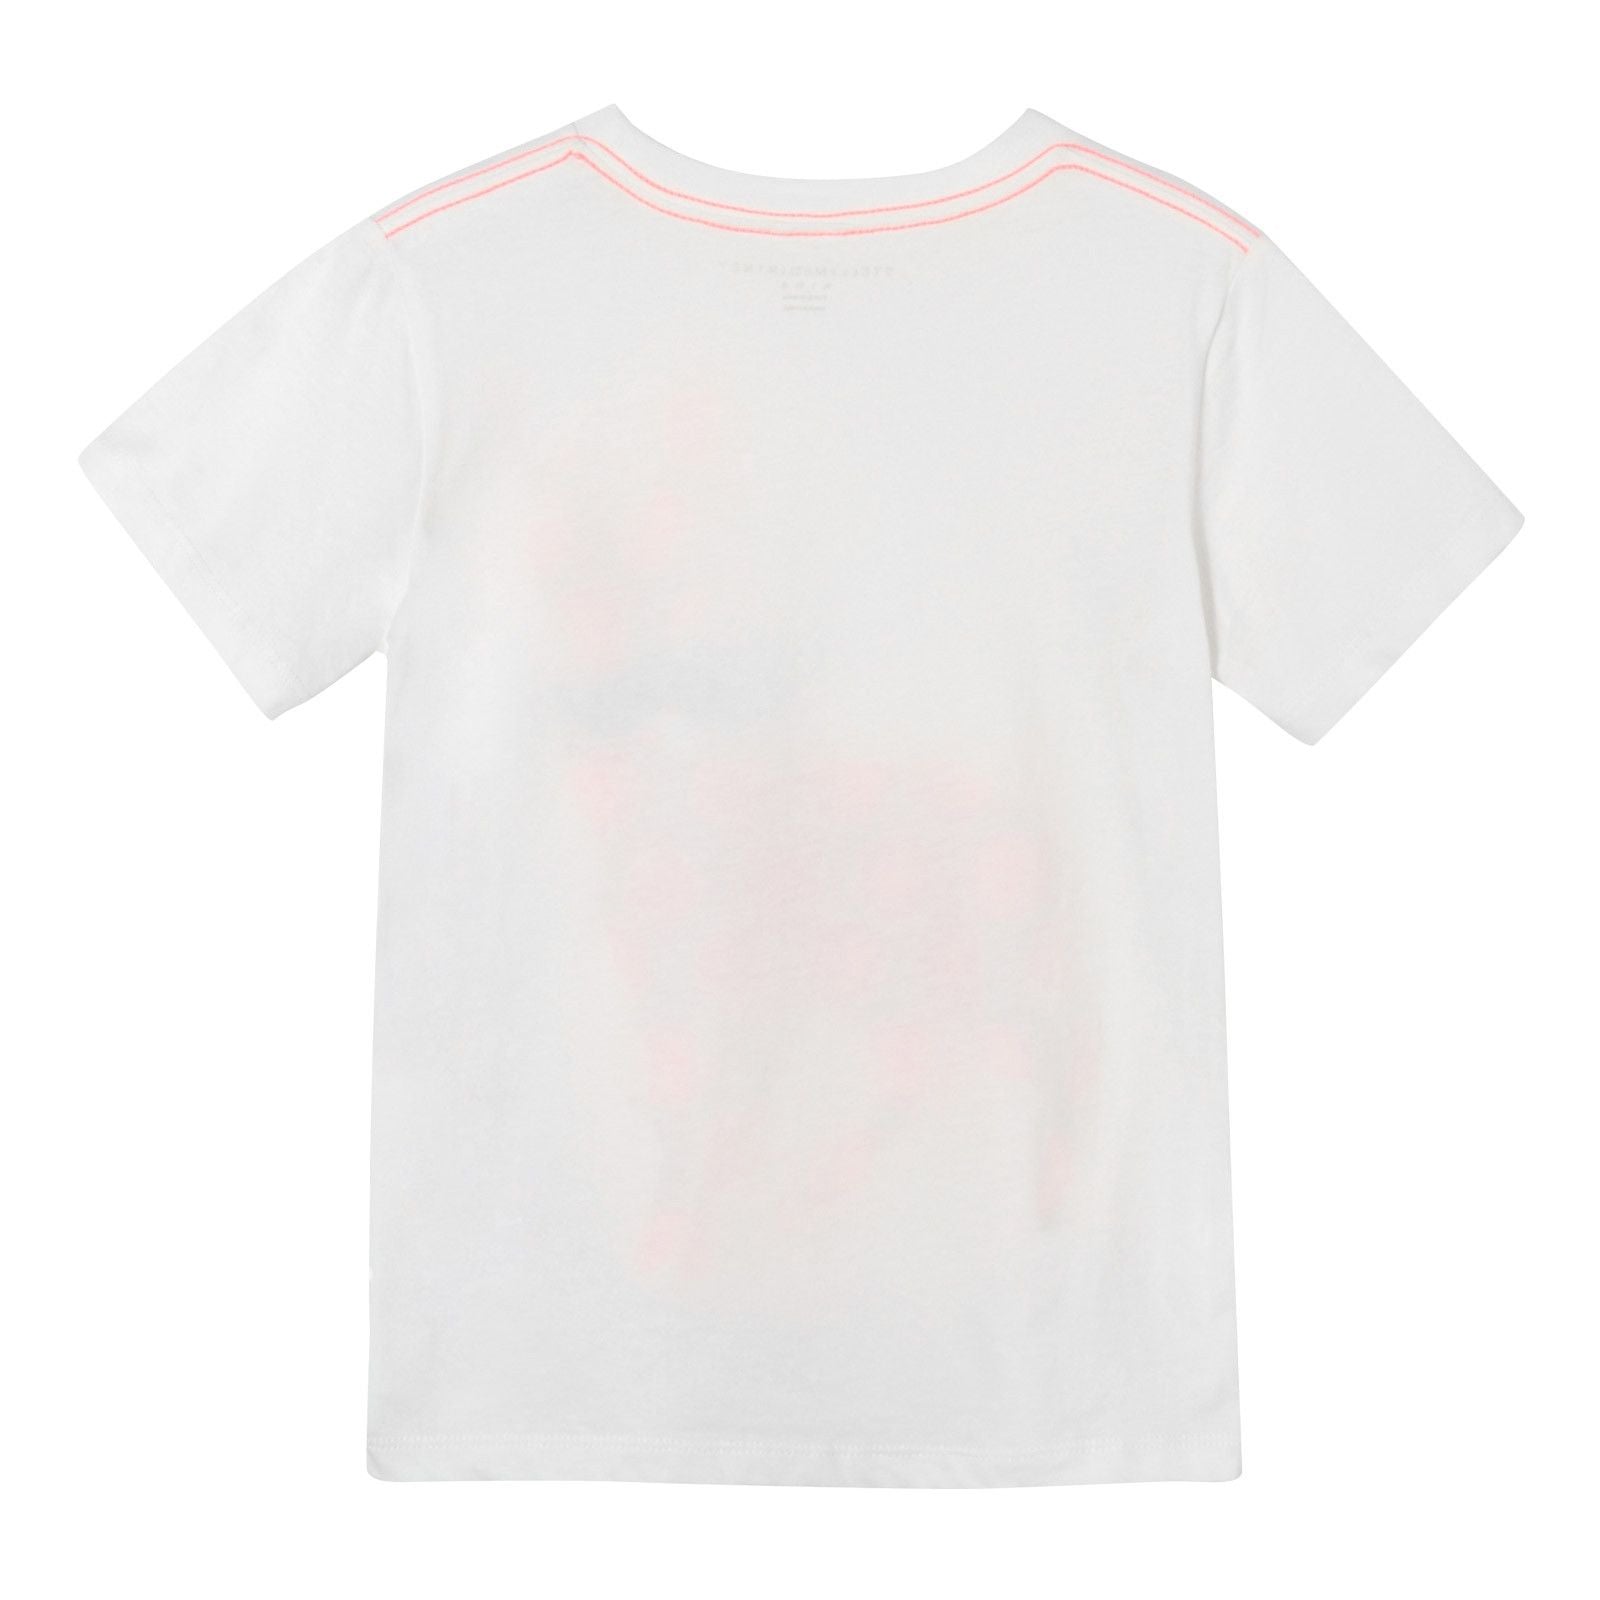 Girls White Cotton T-Shirt With Pink Deer Printed - CÉMAROSE | Children's Fashion Store - 2